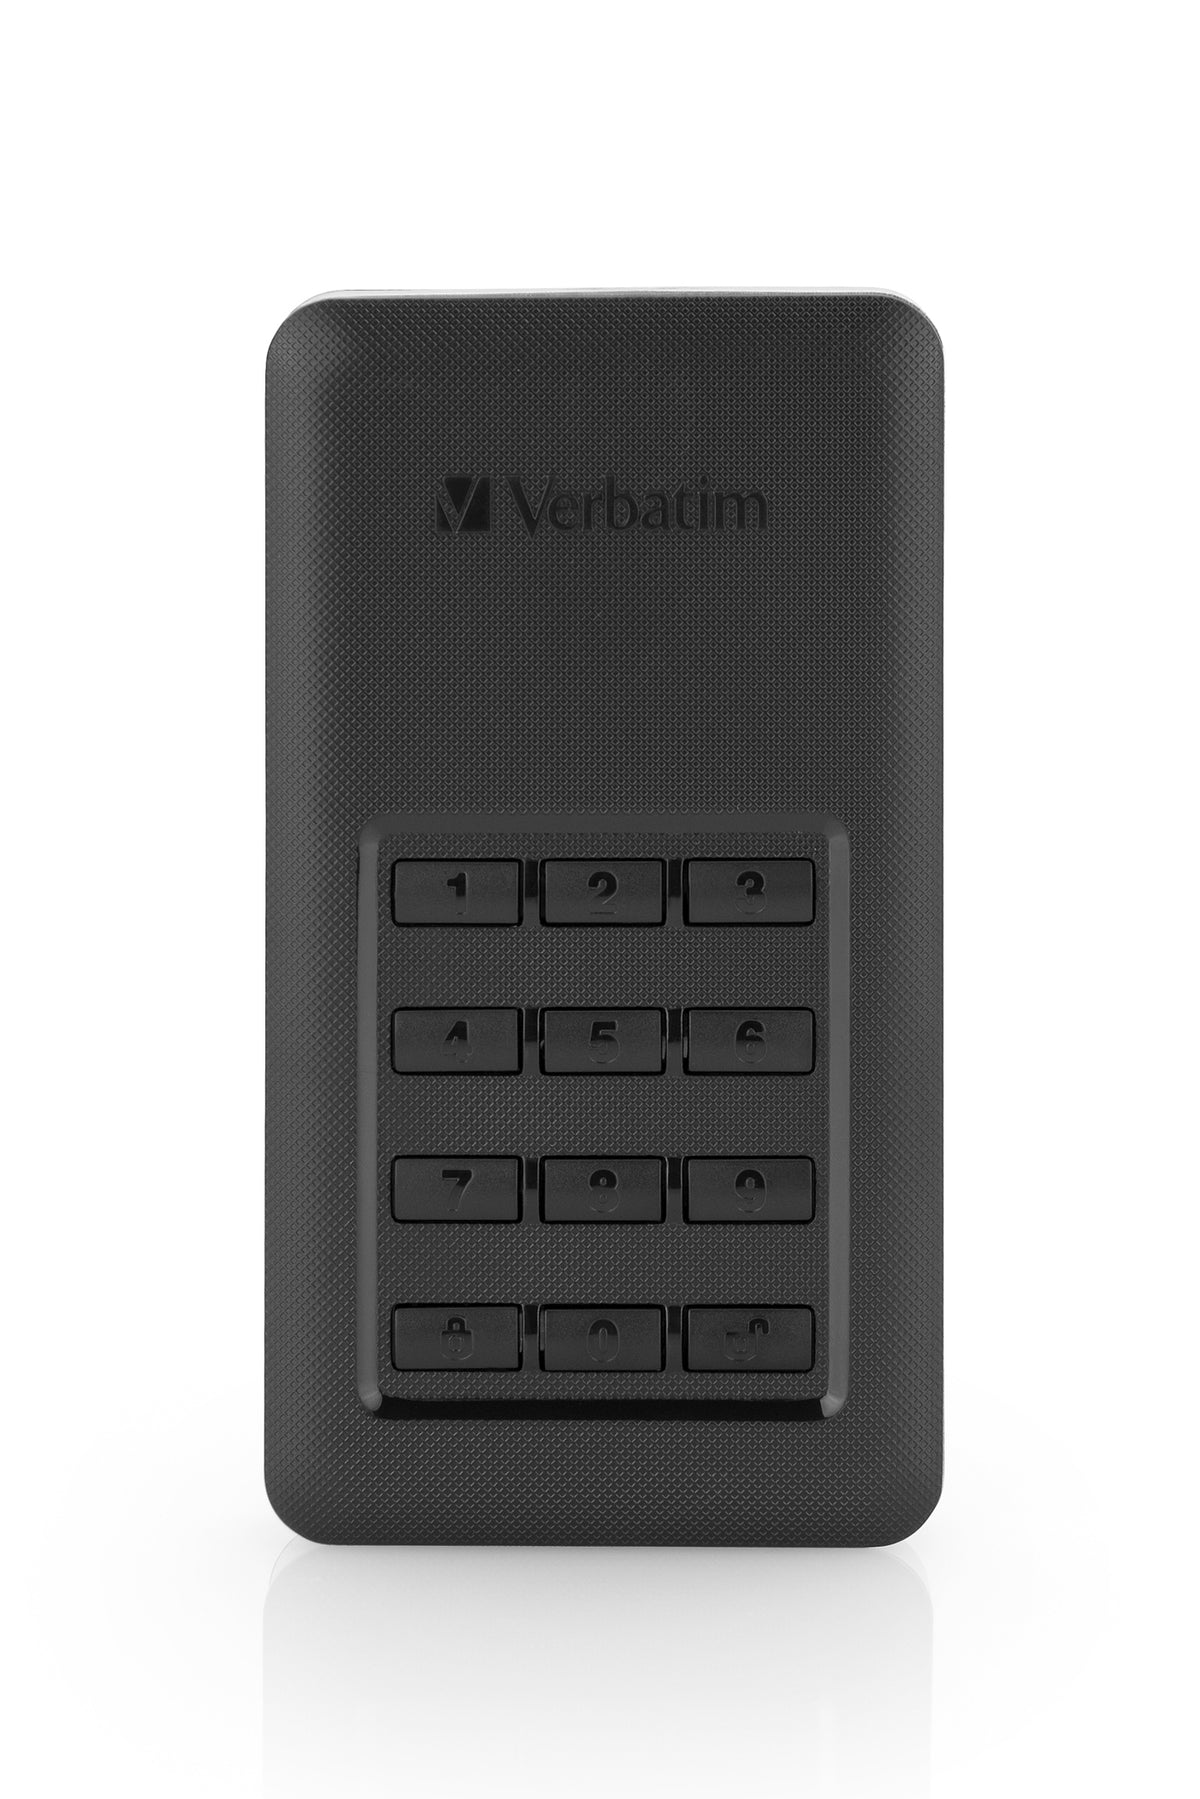 Verbatim External SSD Store 'n' Go Portable SSD with Keypad Access 256GB